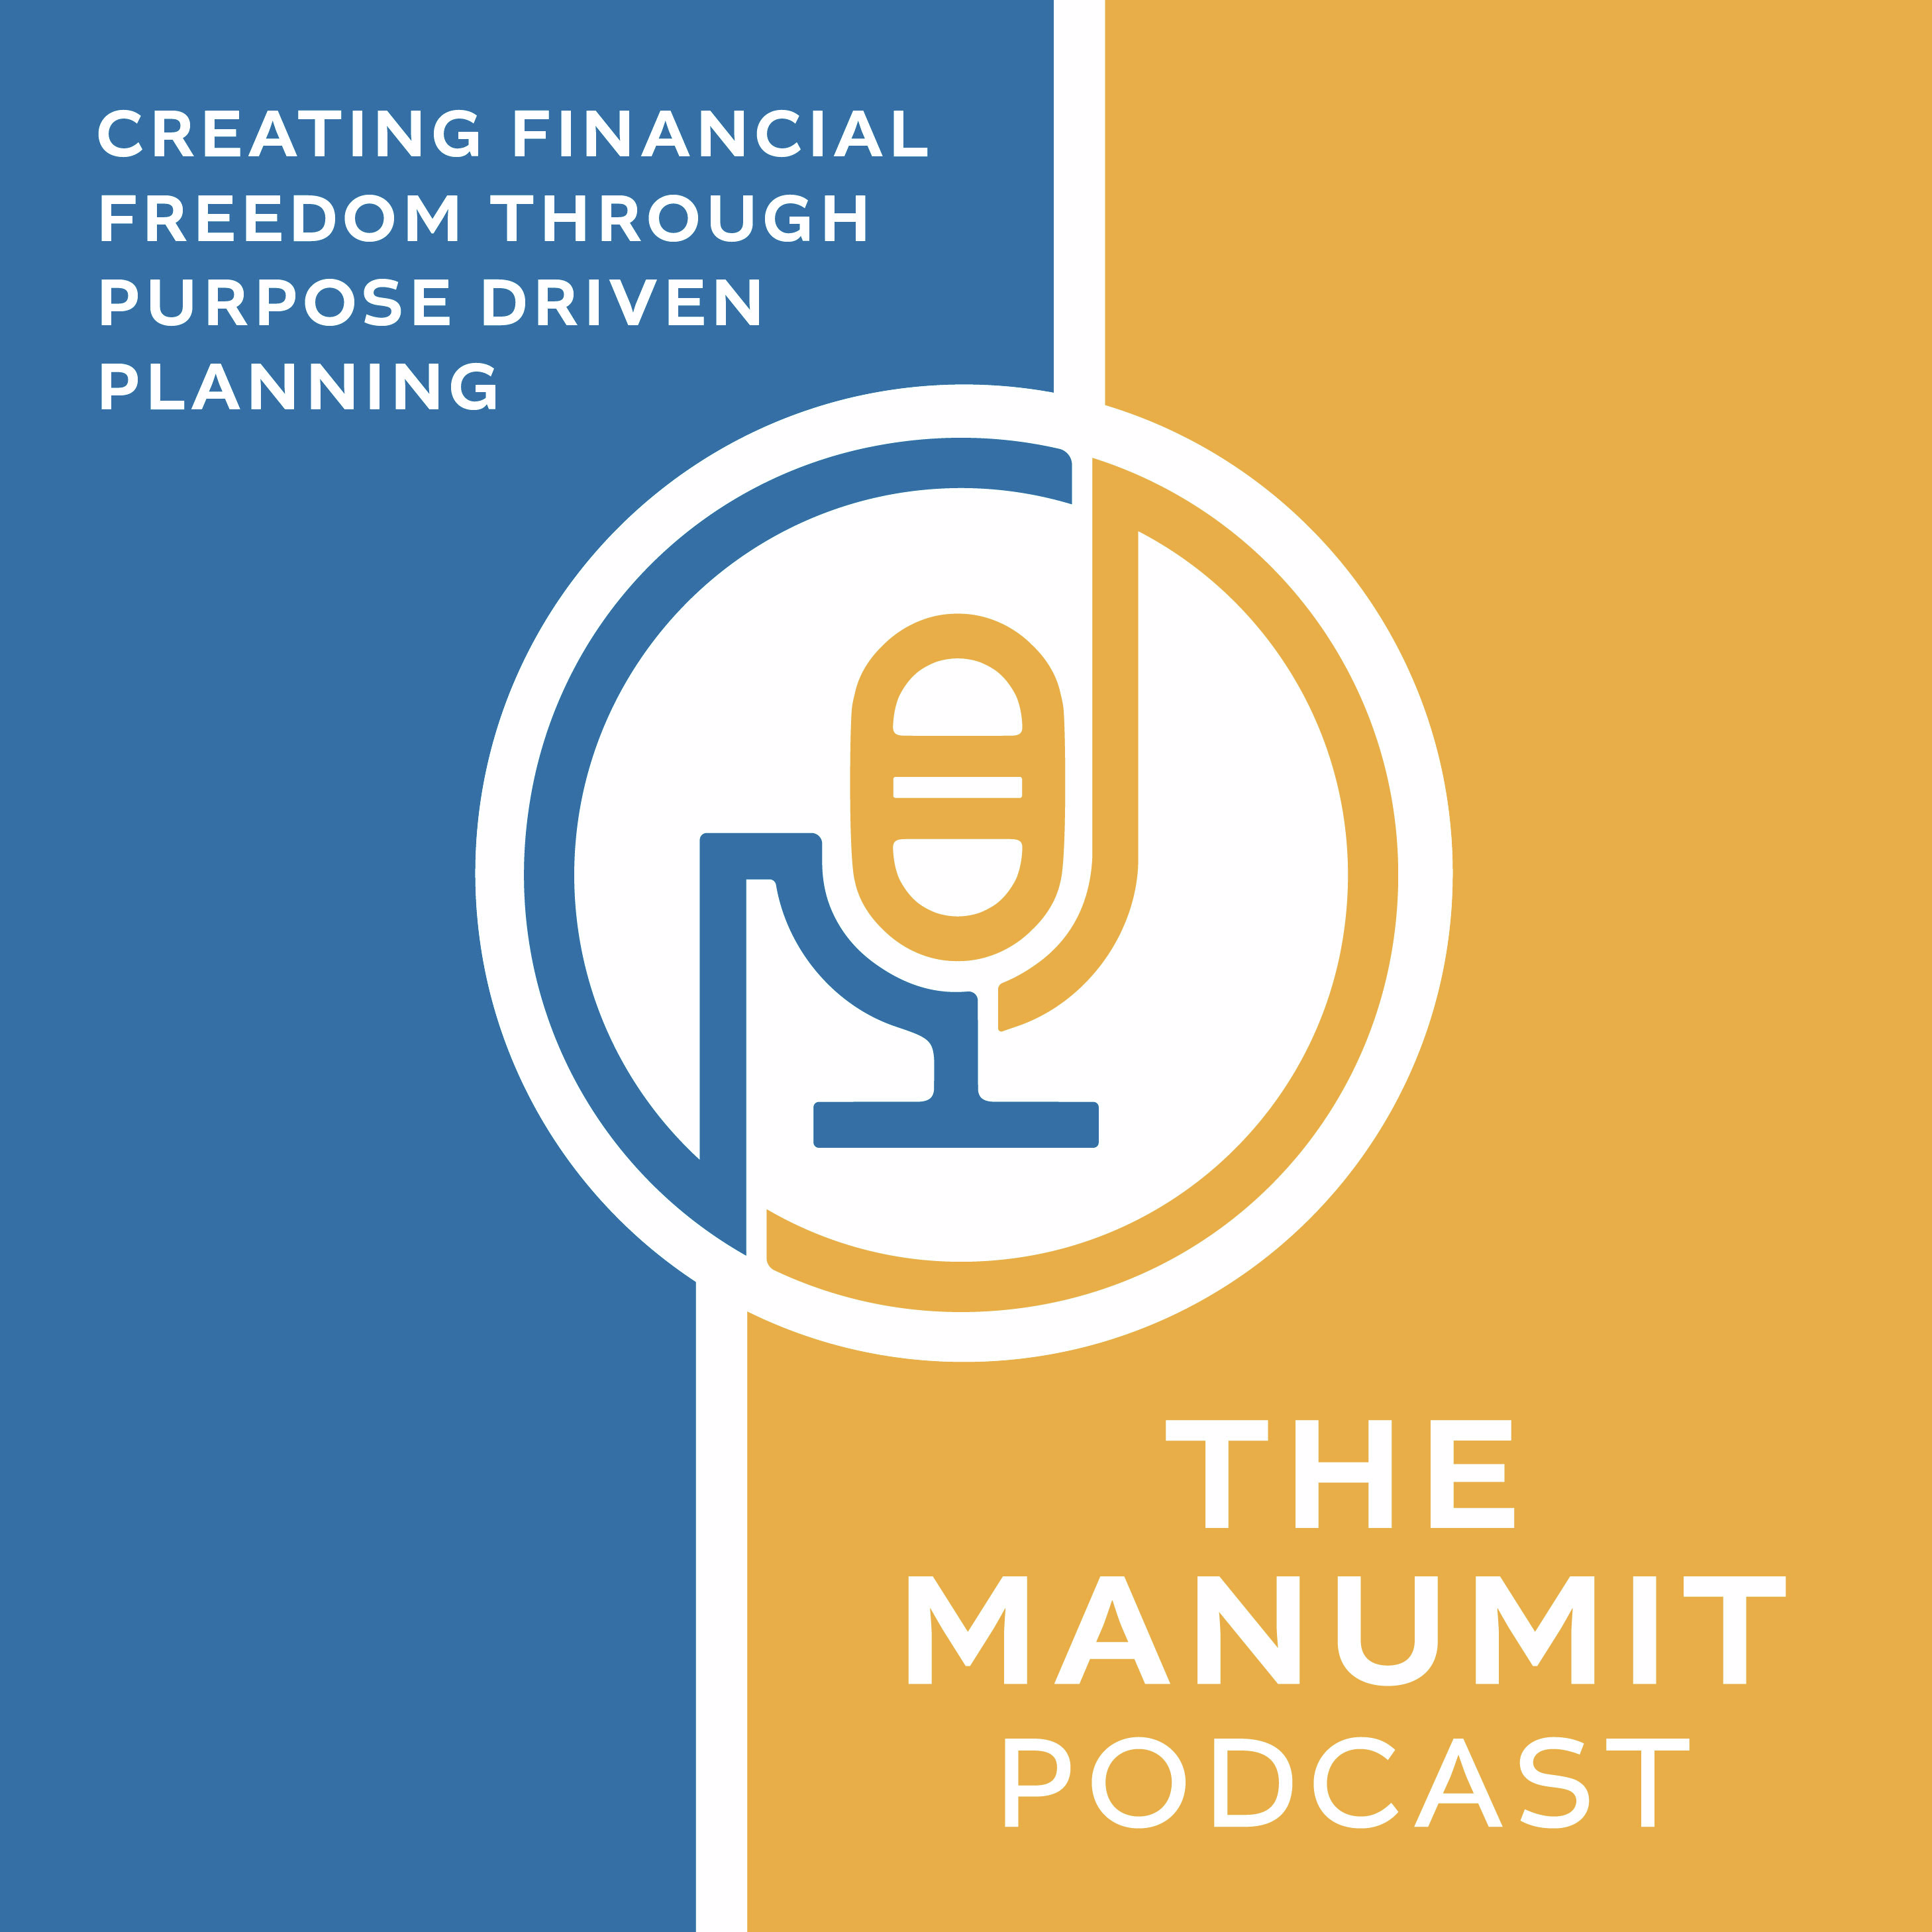 The Manumit Podcast with Glenn Johnson